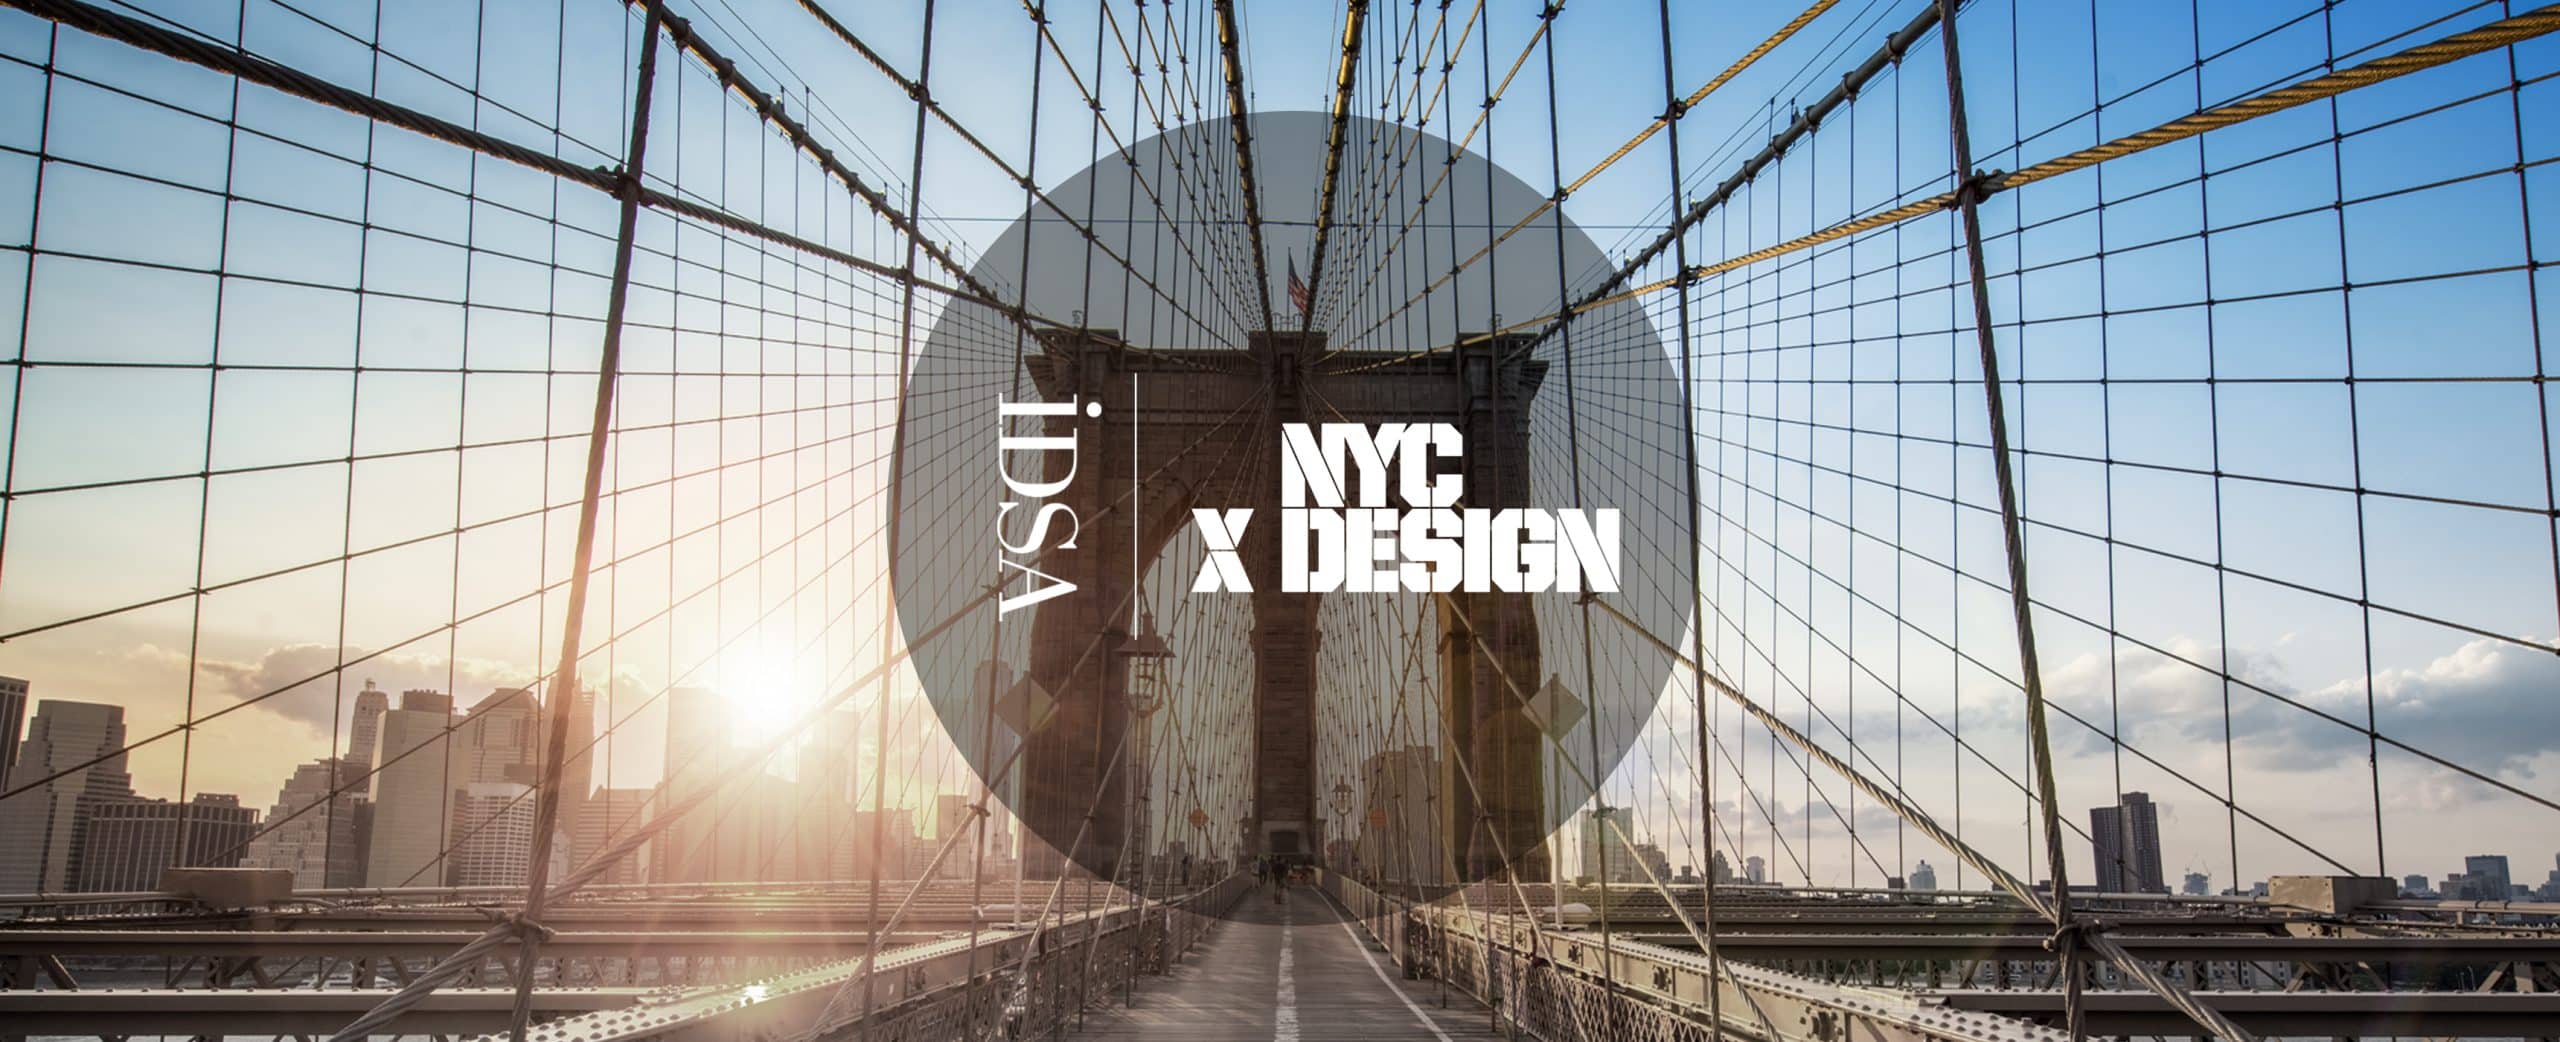 NYCxDESIGN-Banner.jpg